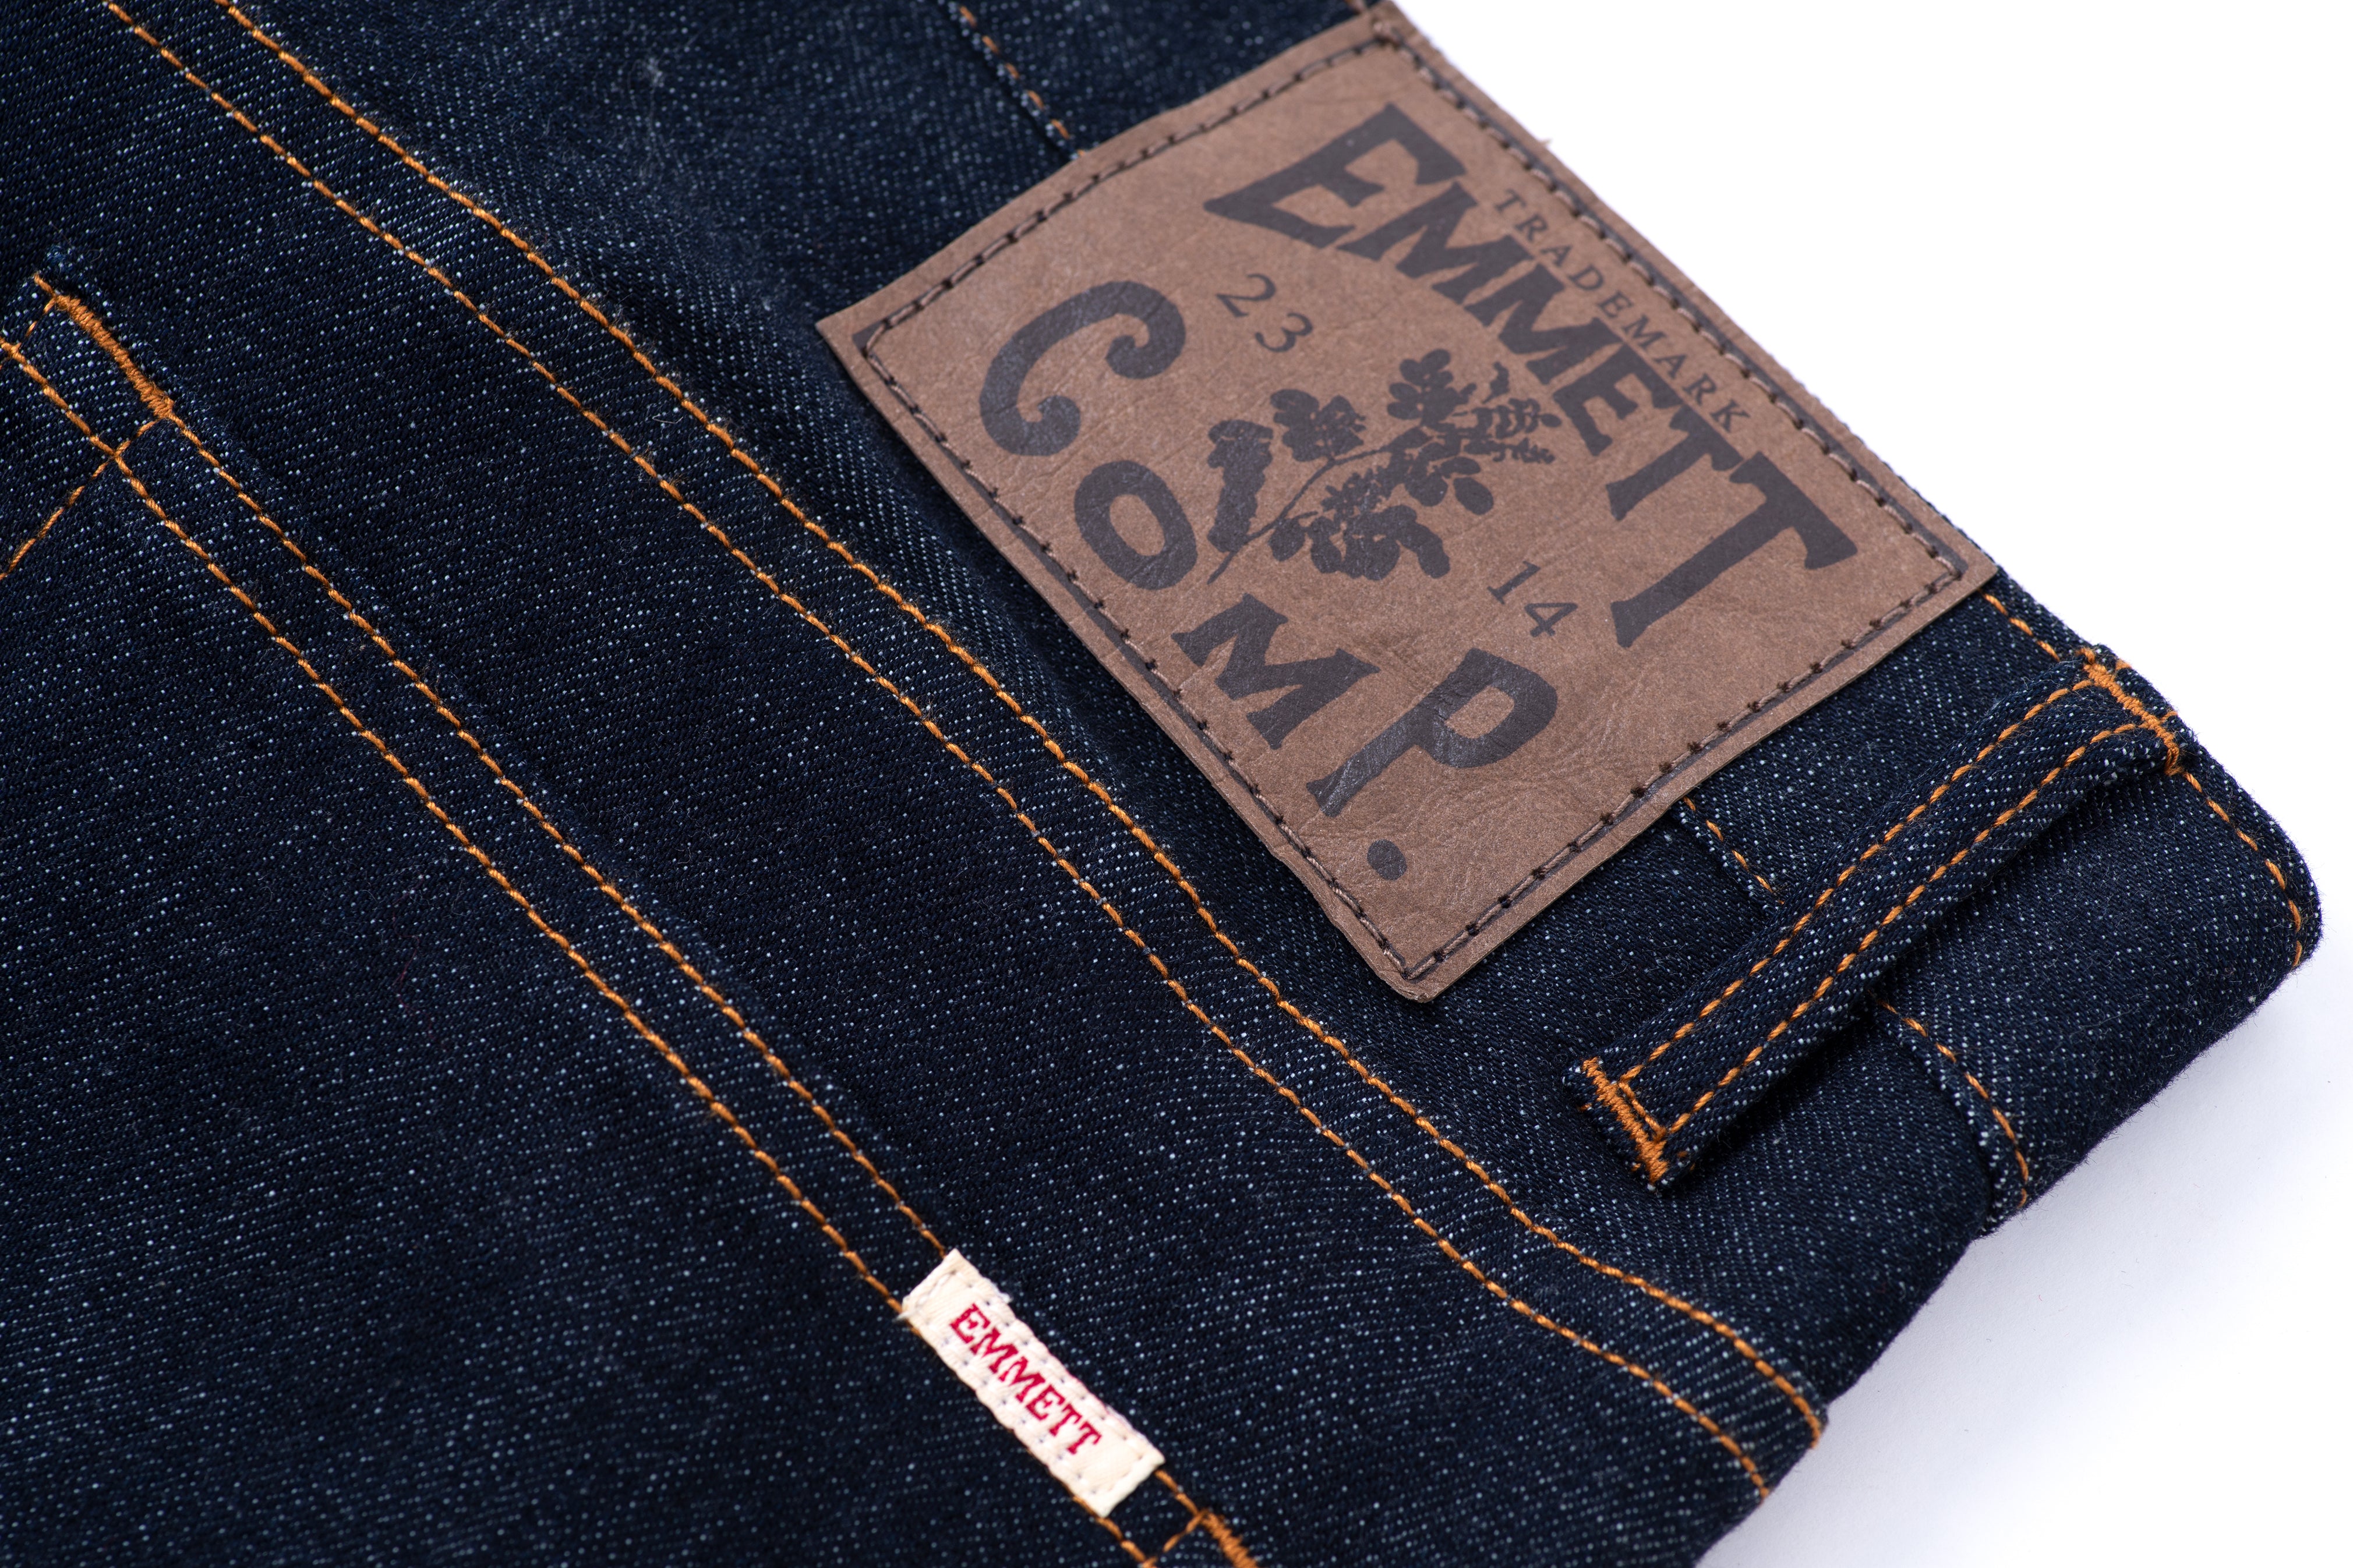 Emmett men's E D Joe Indigo Selvage Denim Slim Fit Jeans, SIZE W34/L34